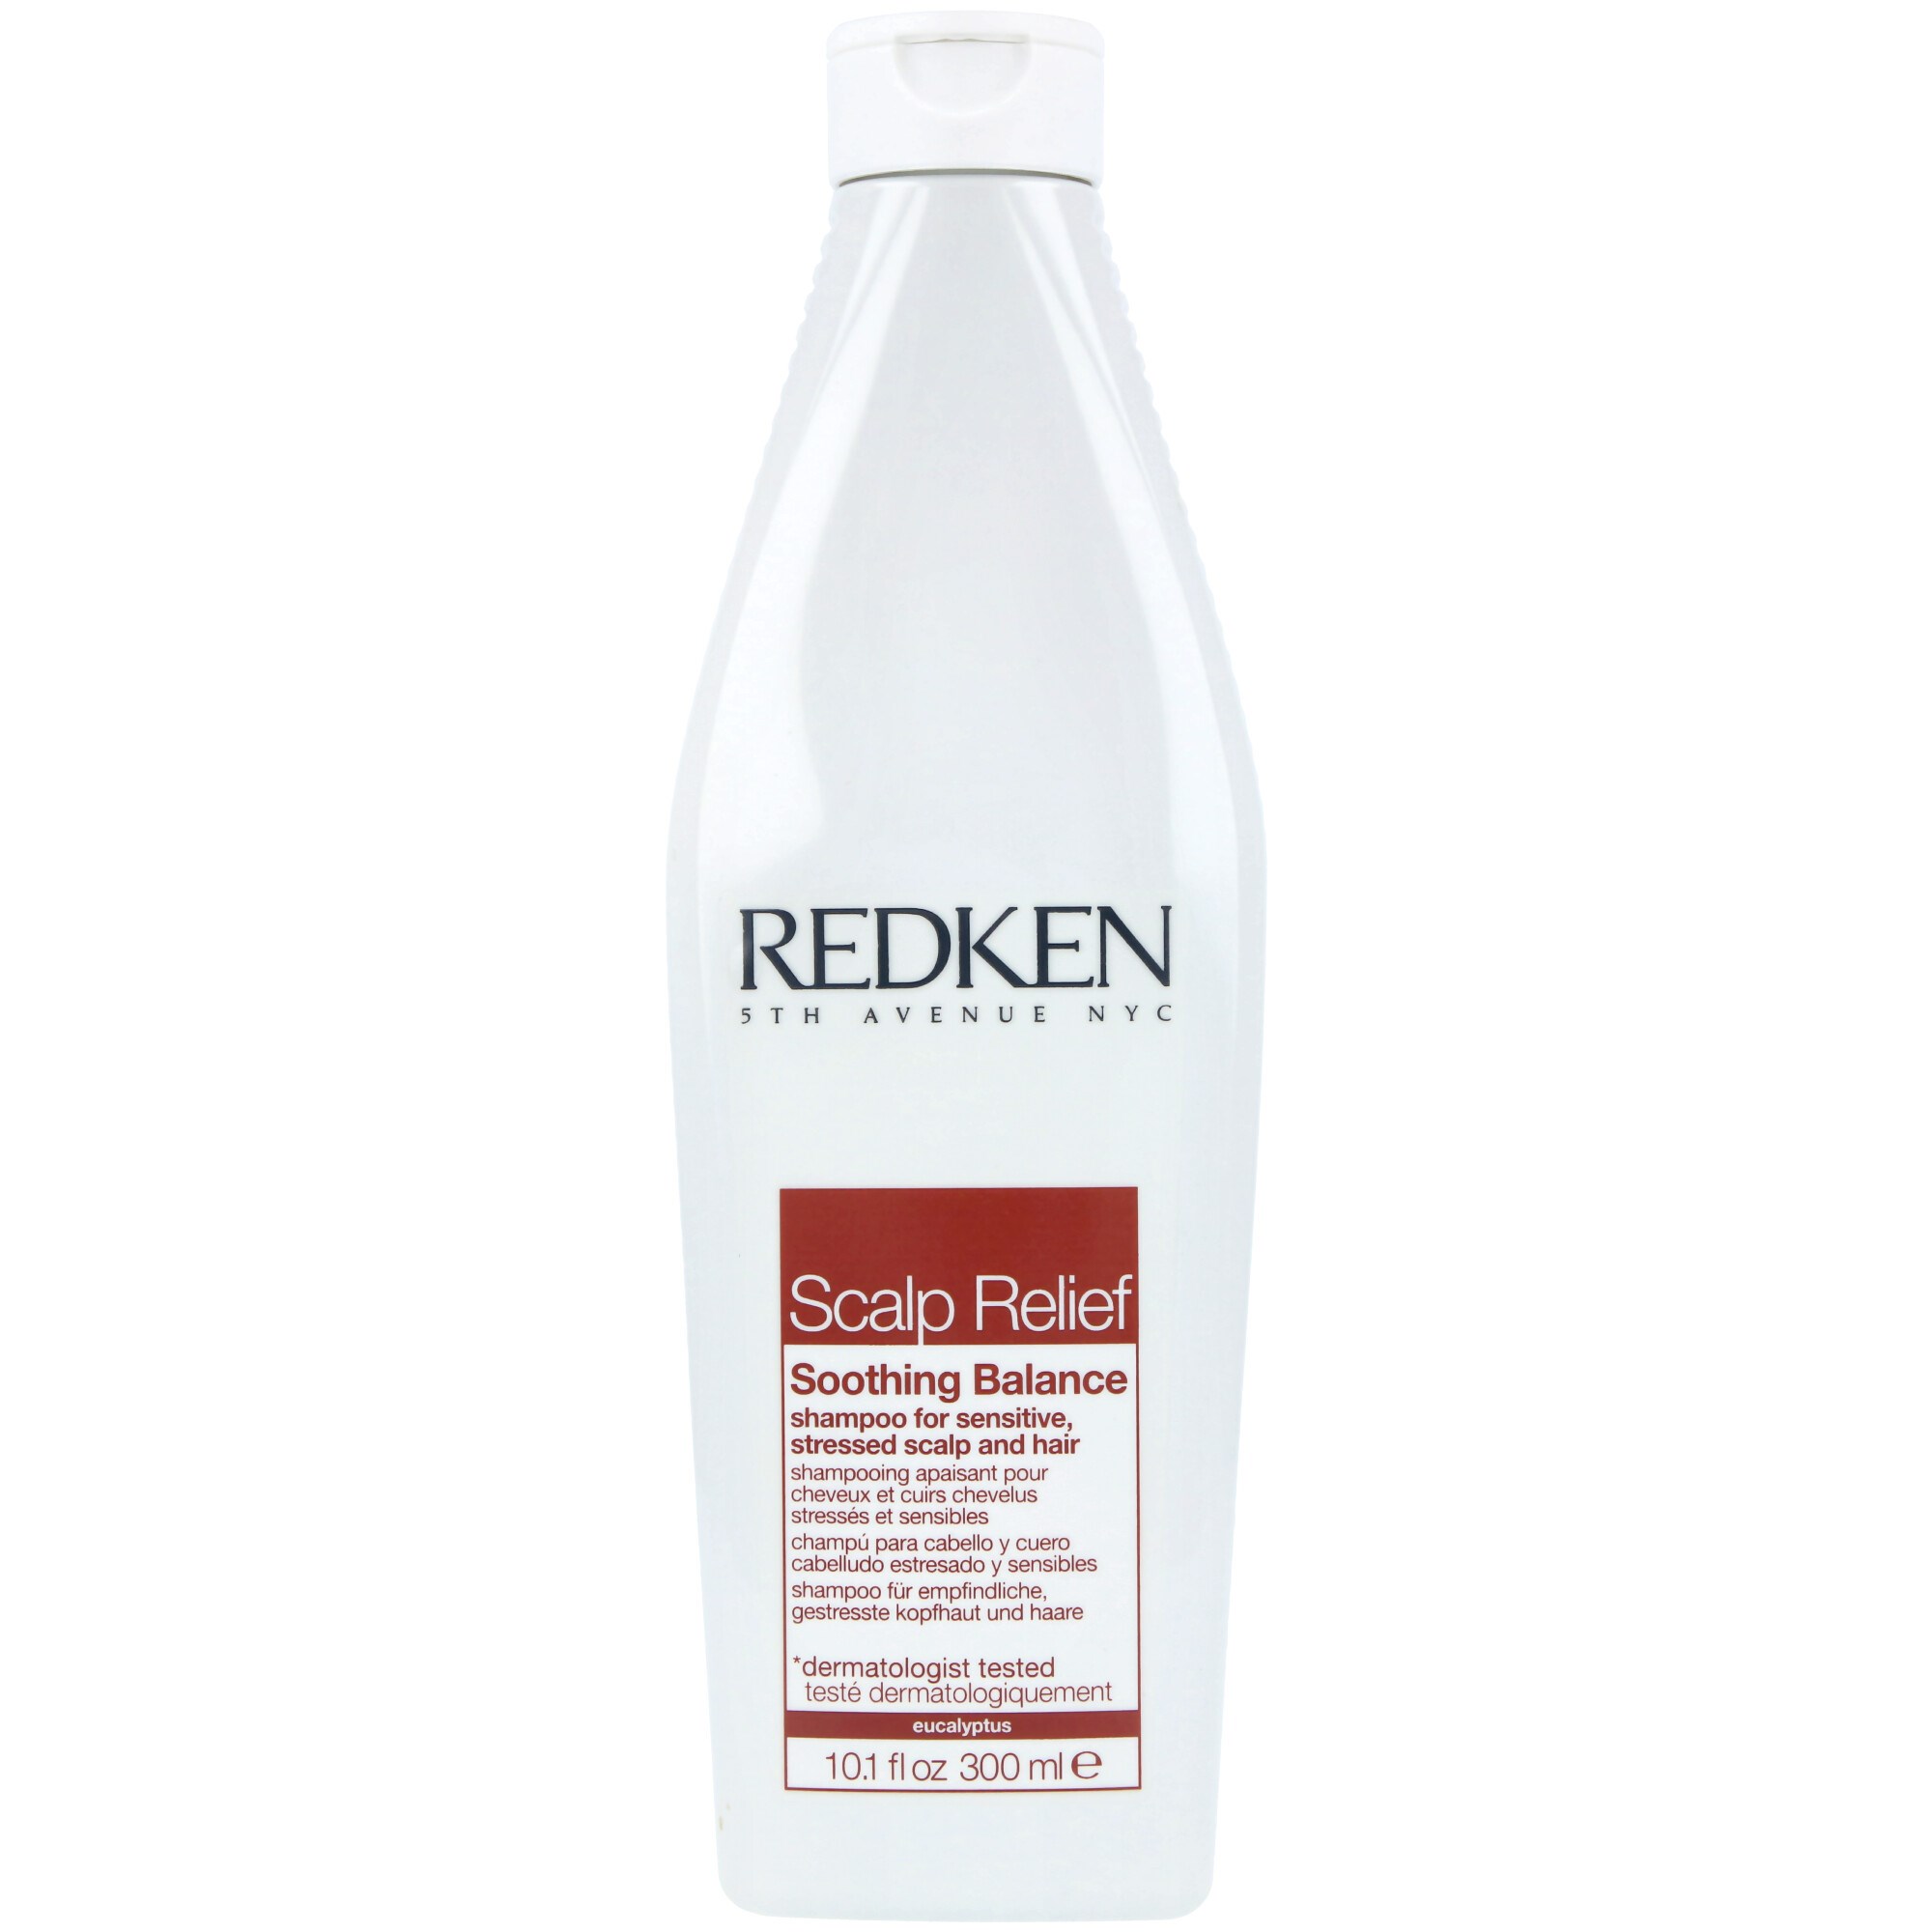 Redken Scalp Relief Soothing Balance Shampoo 300 ml